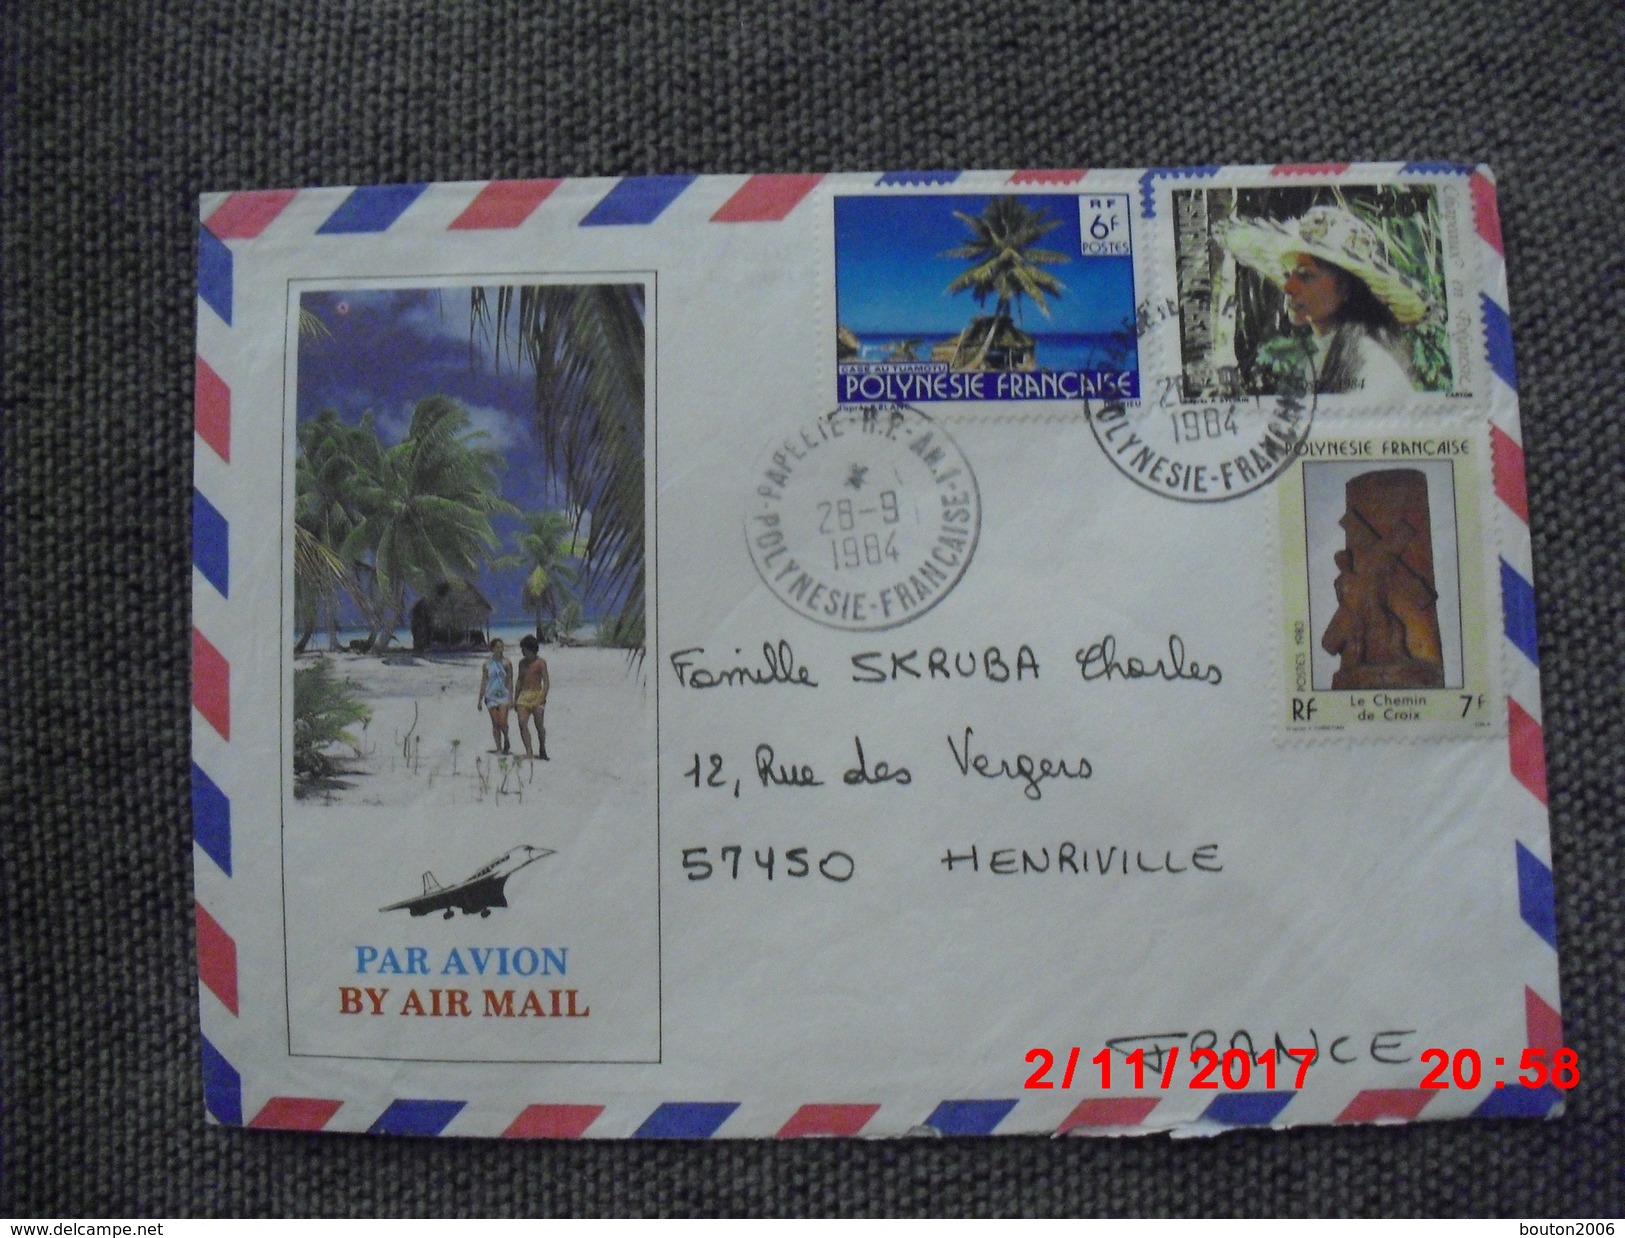 Timbres Polynésie Française 1984 Sur Enveloppe - Used Stamps